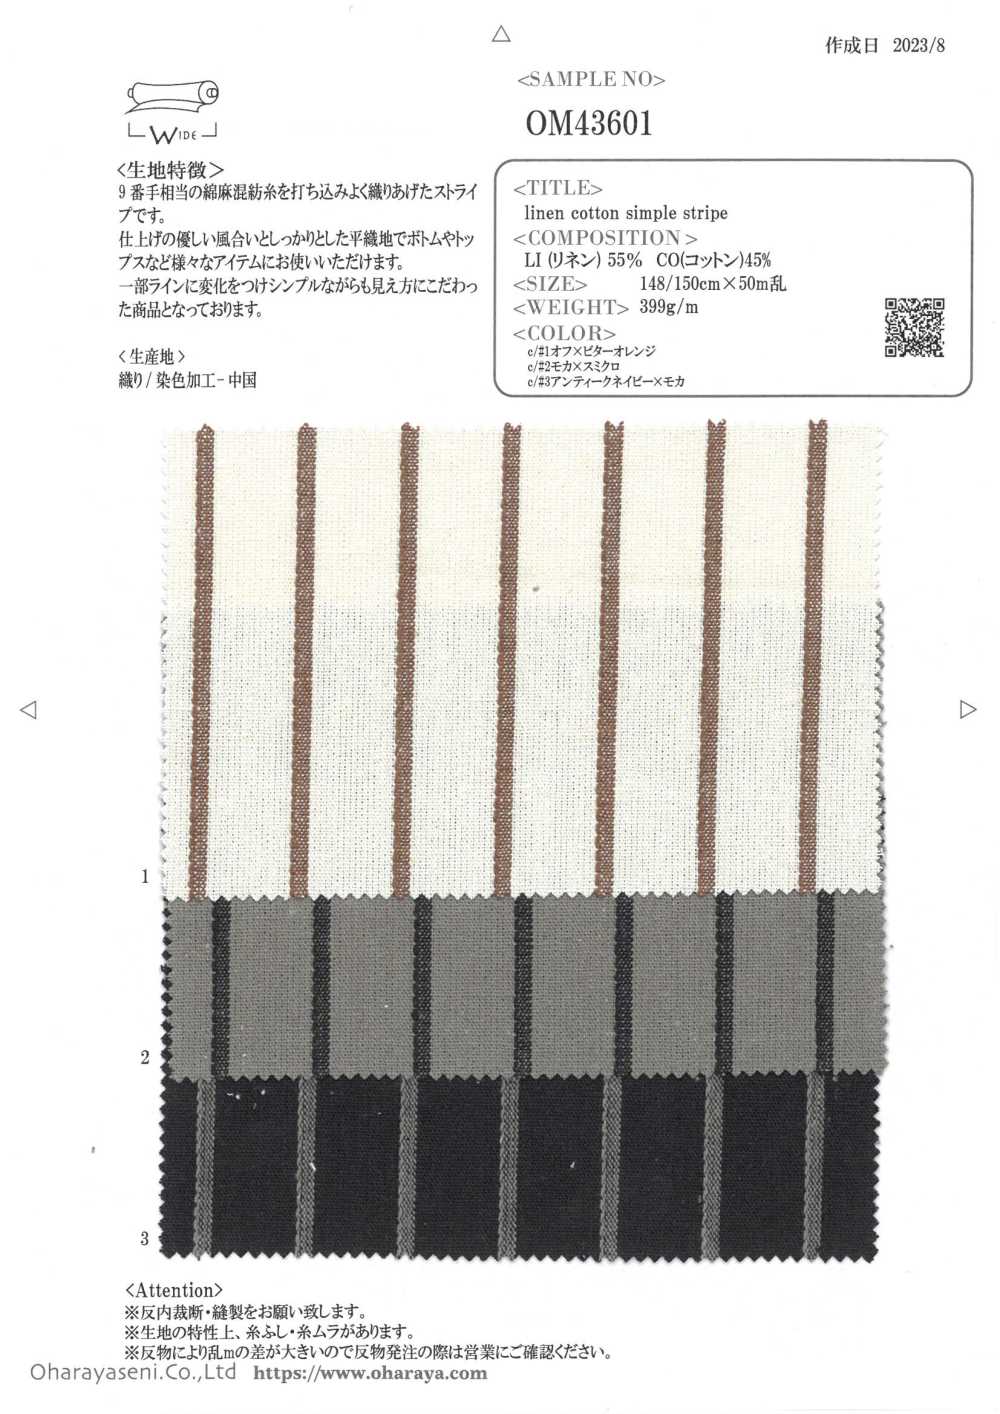 OM43601 Algodón Lino Raya Simple[Fabrica Textil] Oharayaseni